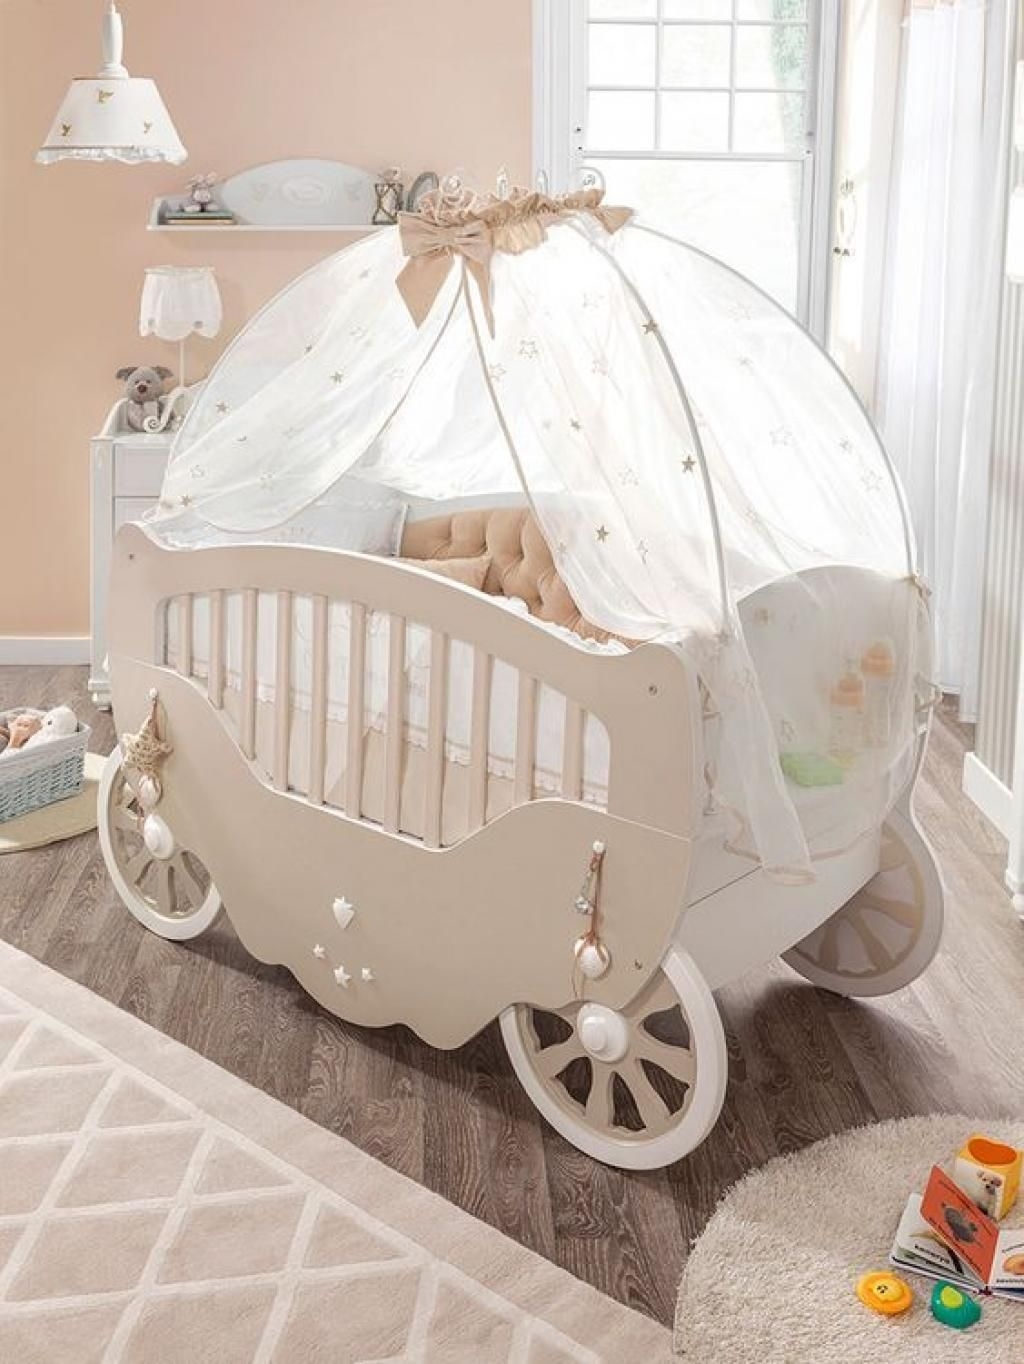 Cute Baby Crib Bedding Ideas on Foter